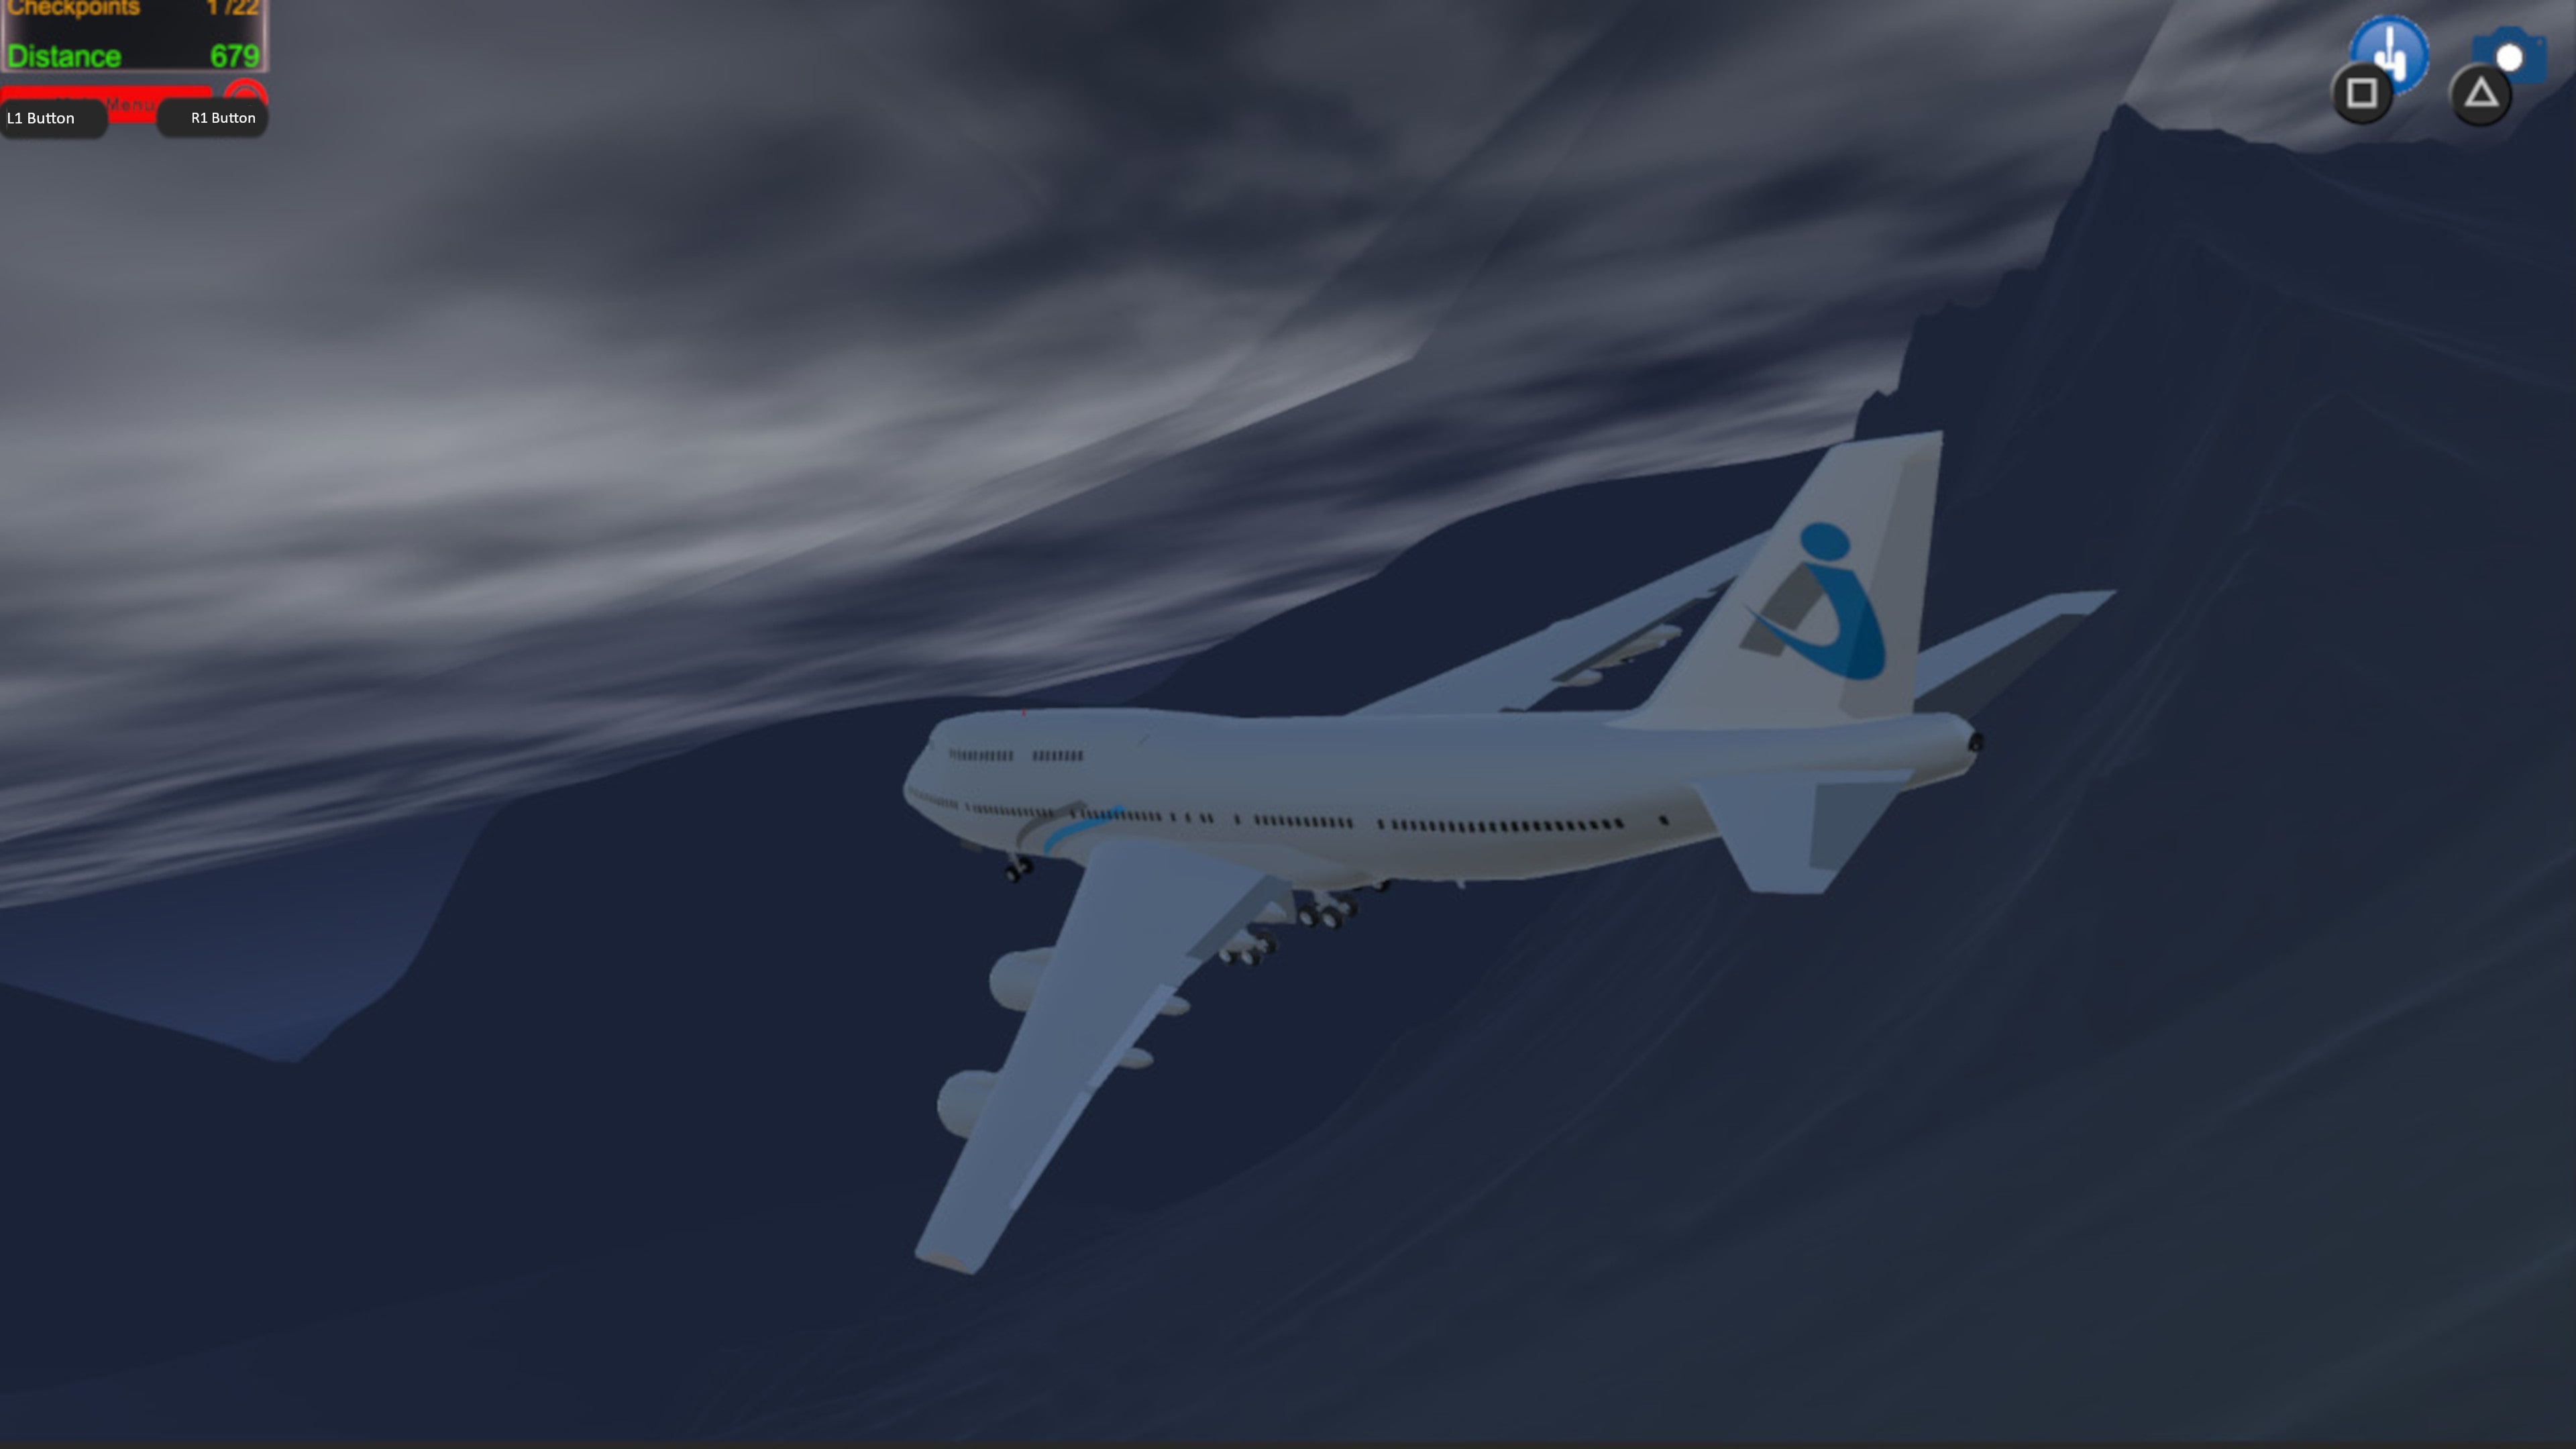 Shop Flight Simulator Ps4 online